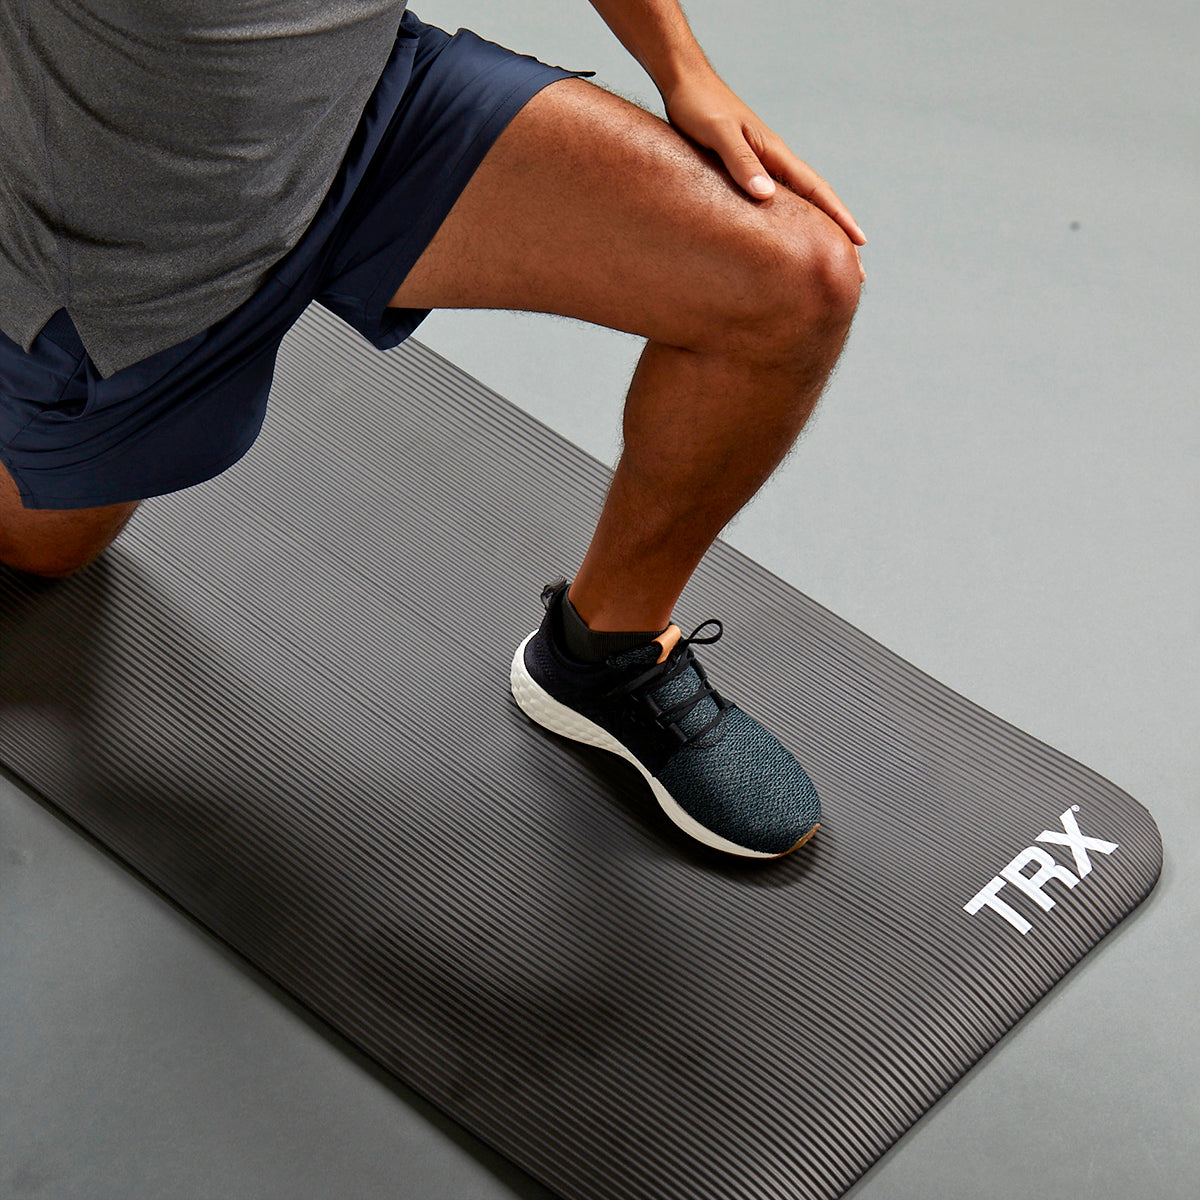 Pilates & Yoga Mat XL (Blue/Gray) for Pilates